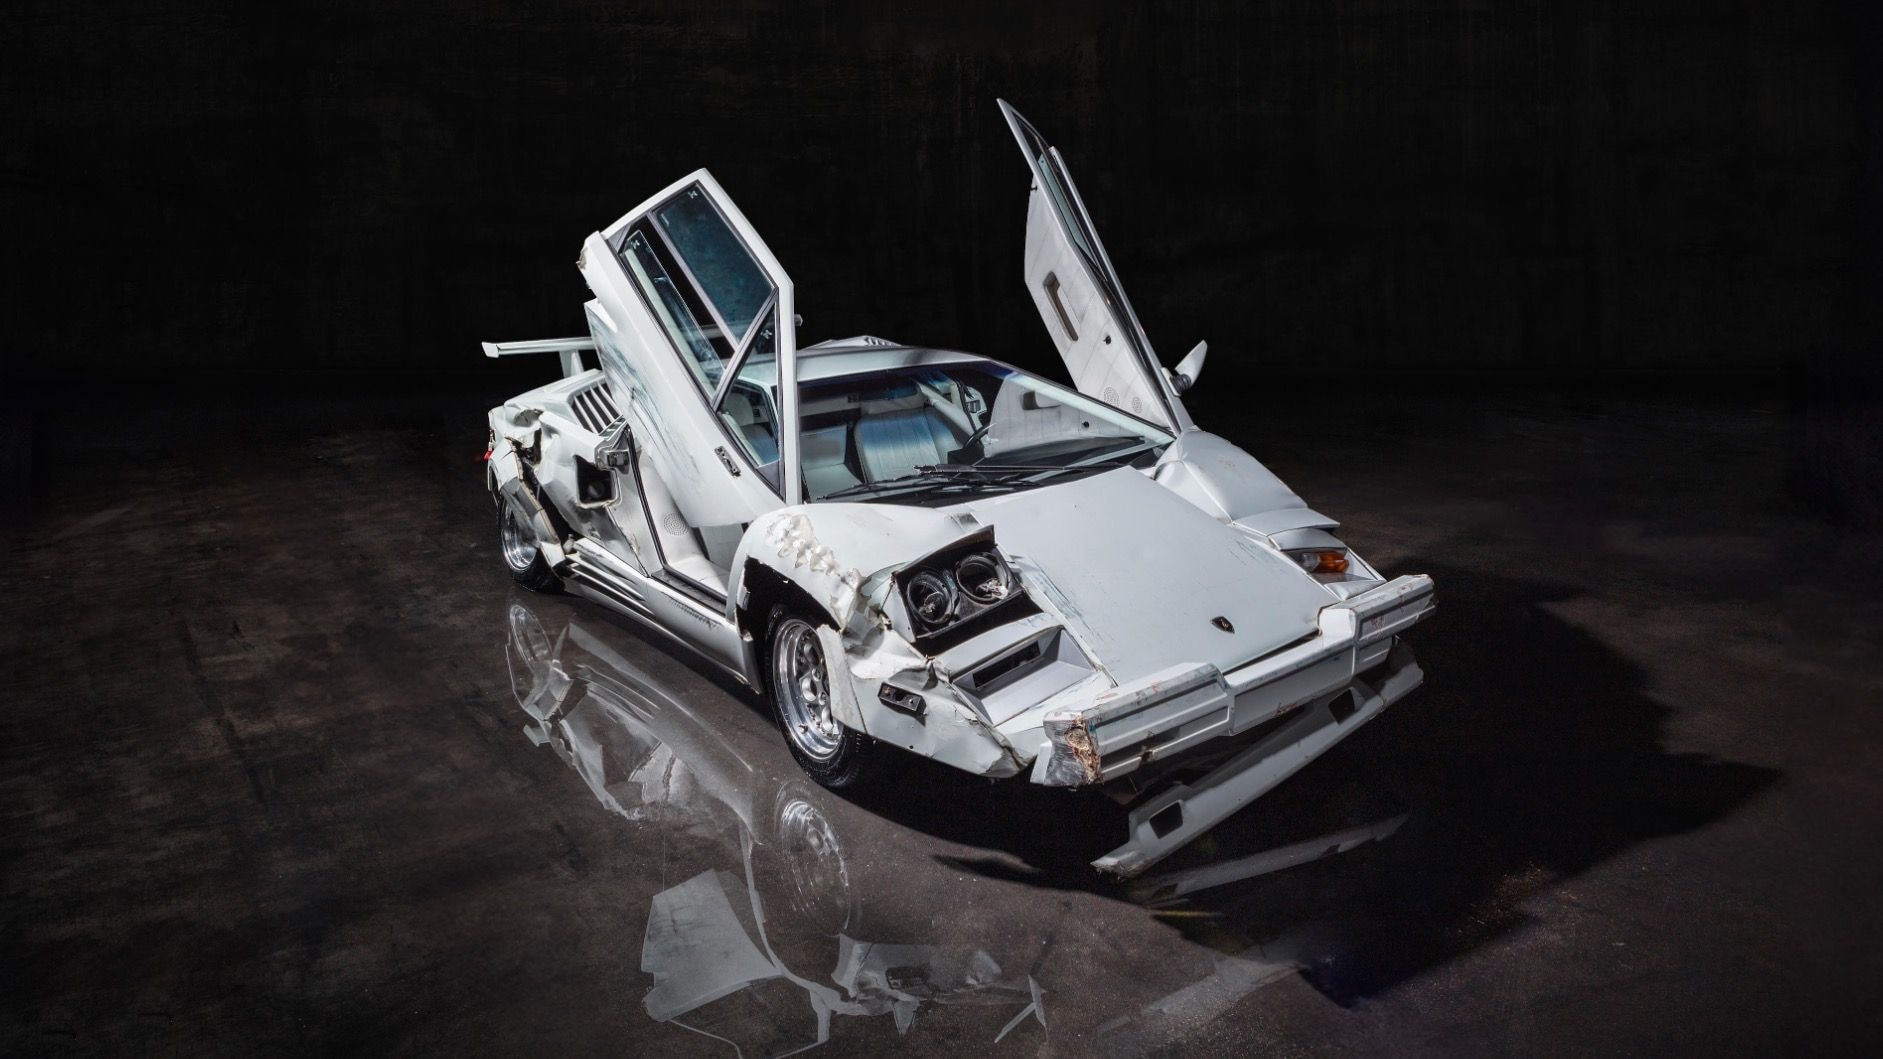 1989 Lamborghini Countach from "The Wolf of Wall Street" (photo via Bonhams)